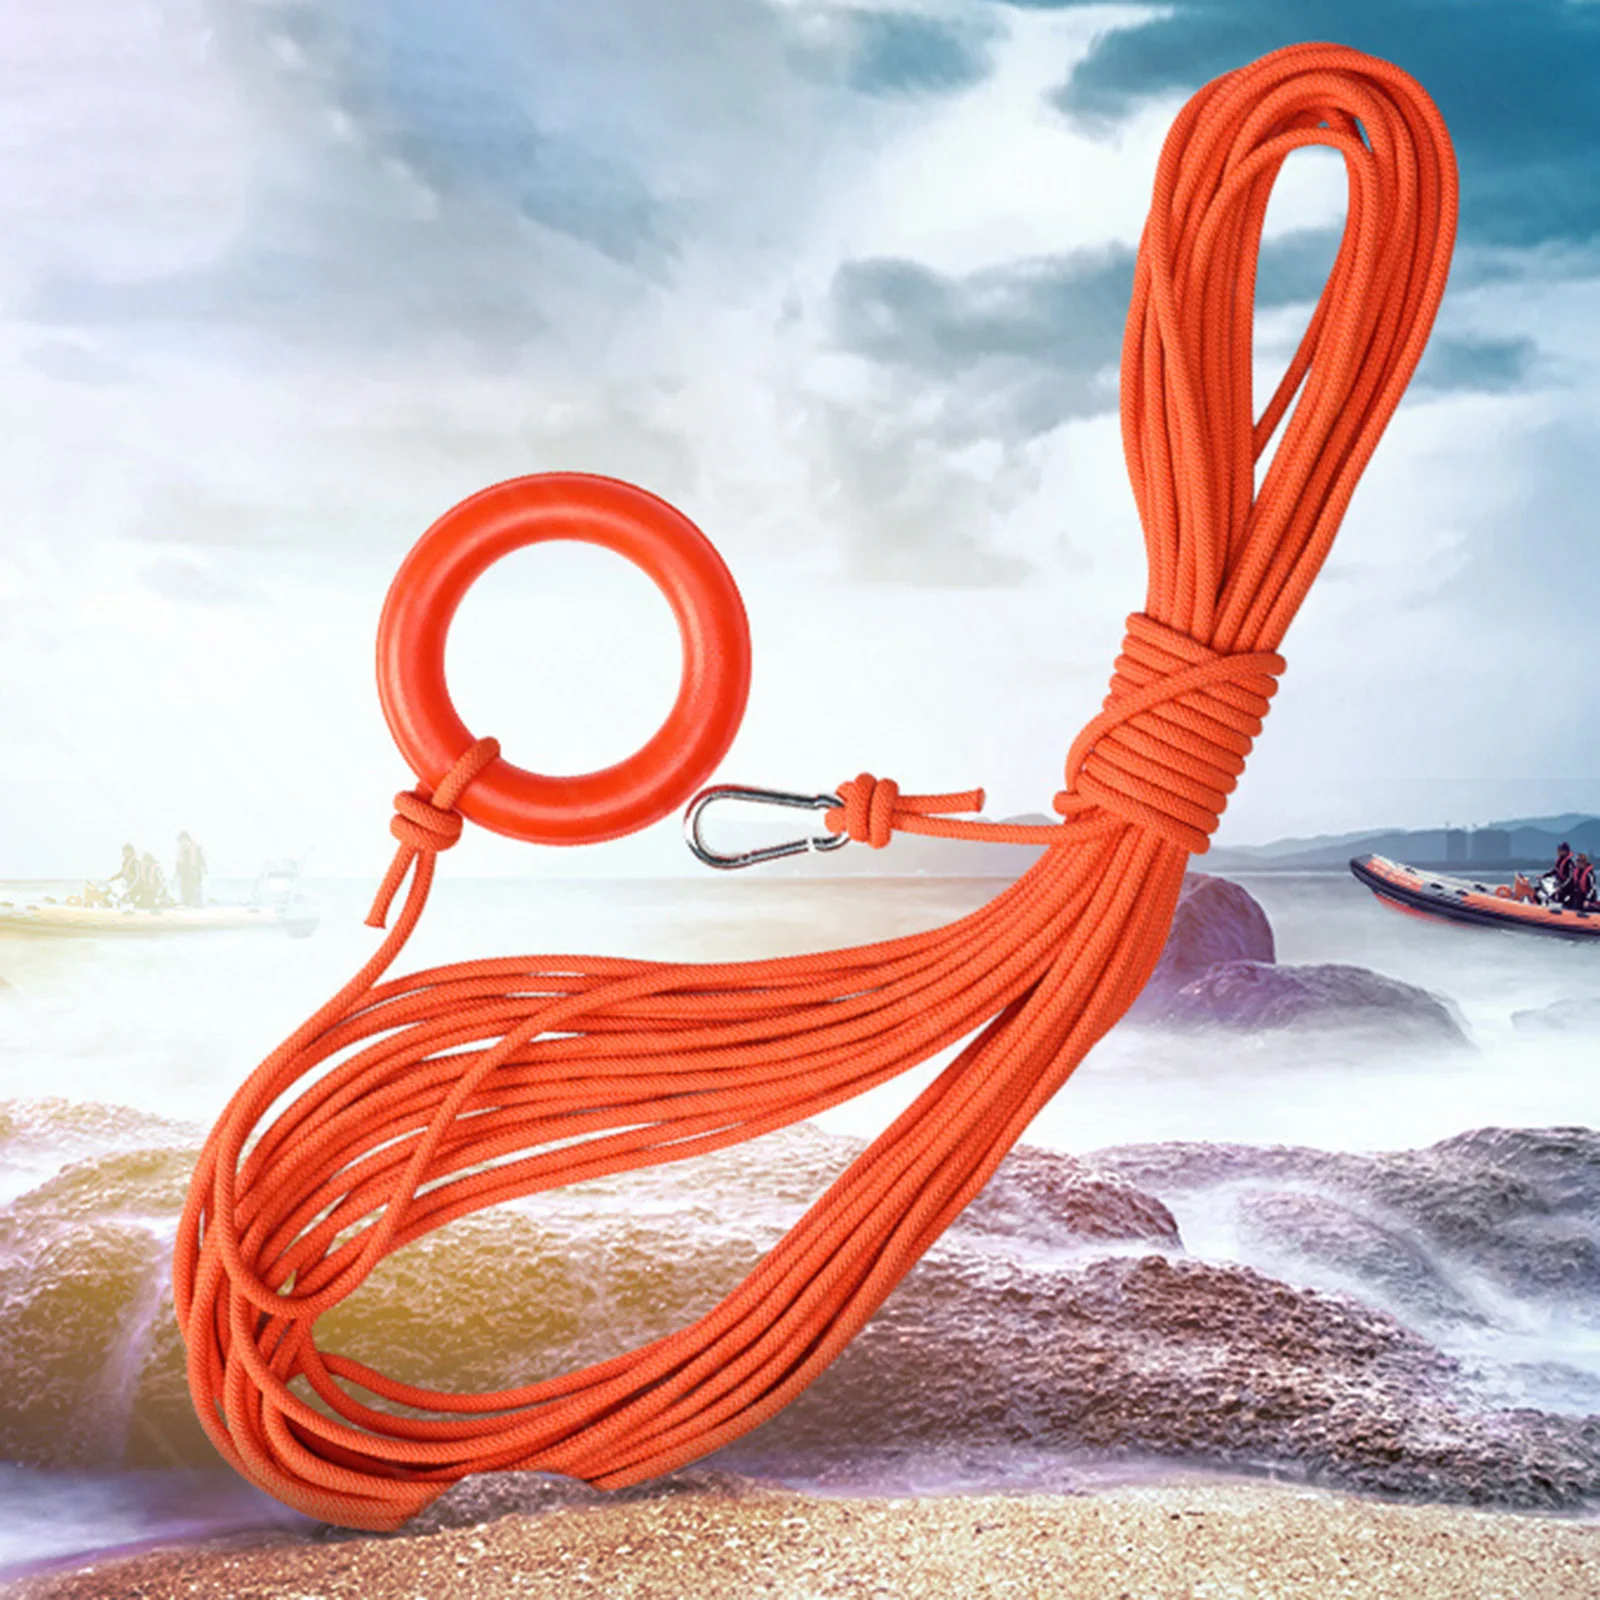 

8mm Diameter Life Saving Line Long 20m Safety Rope Water Floating Lifesaving Rope with Hand Ring/Bracelet